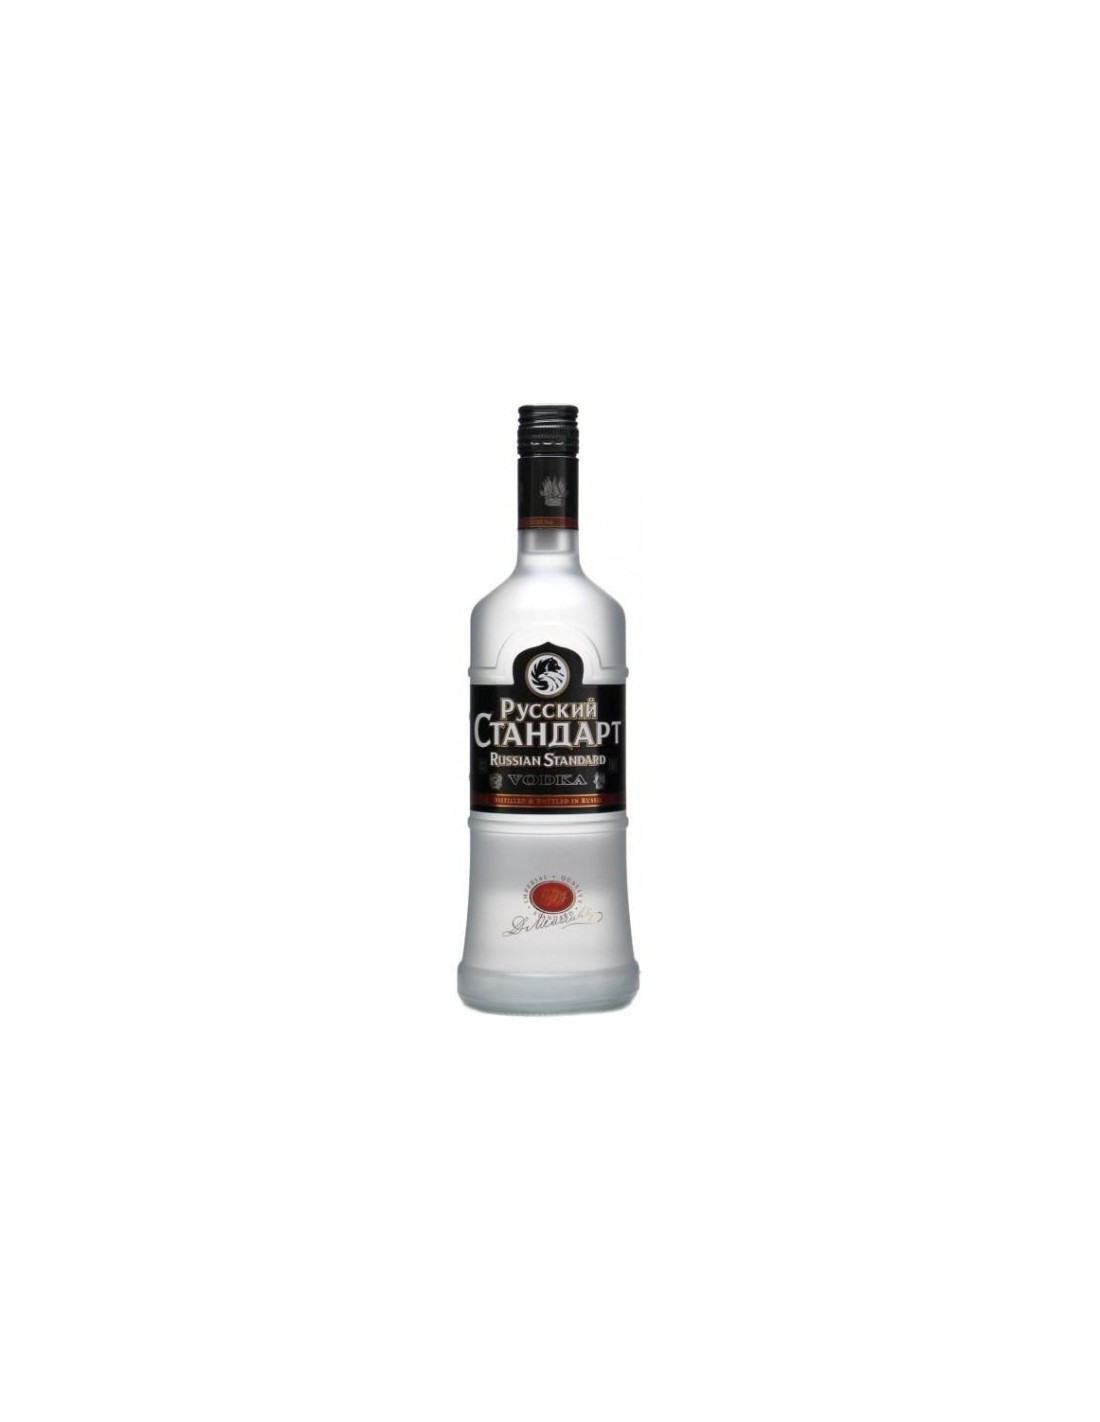 Vodca Russian Standard Original, 0.7L, 40% alc., Rusia alcooldiscount.ro